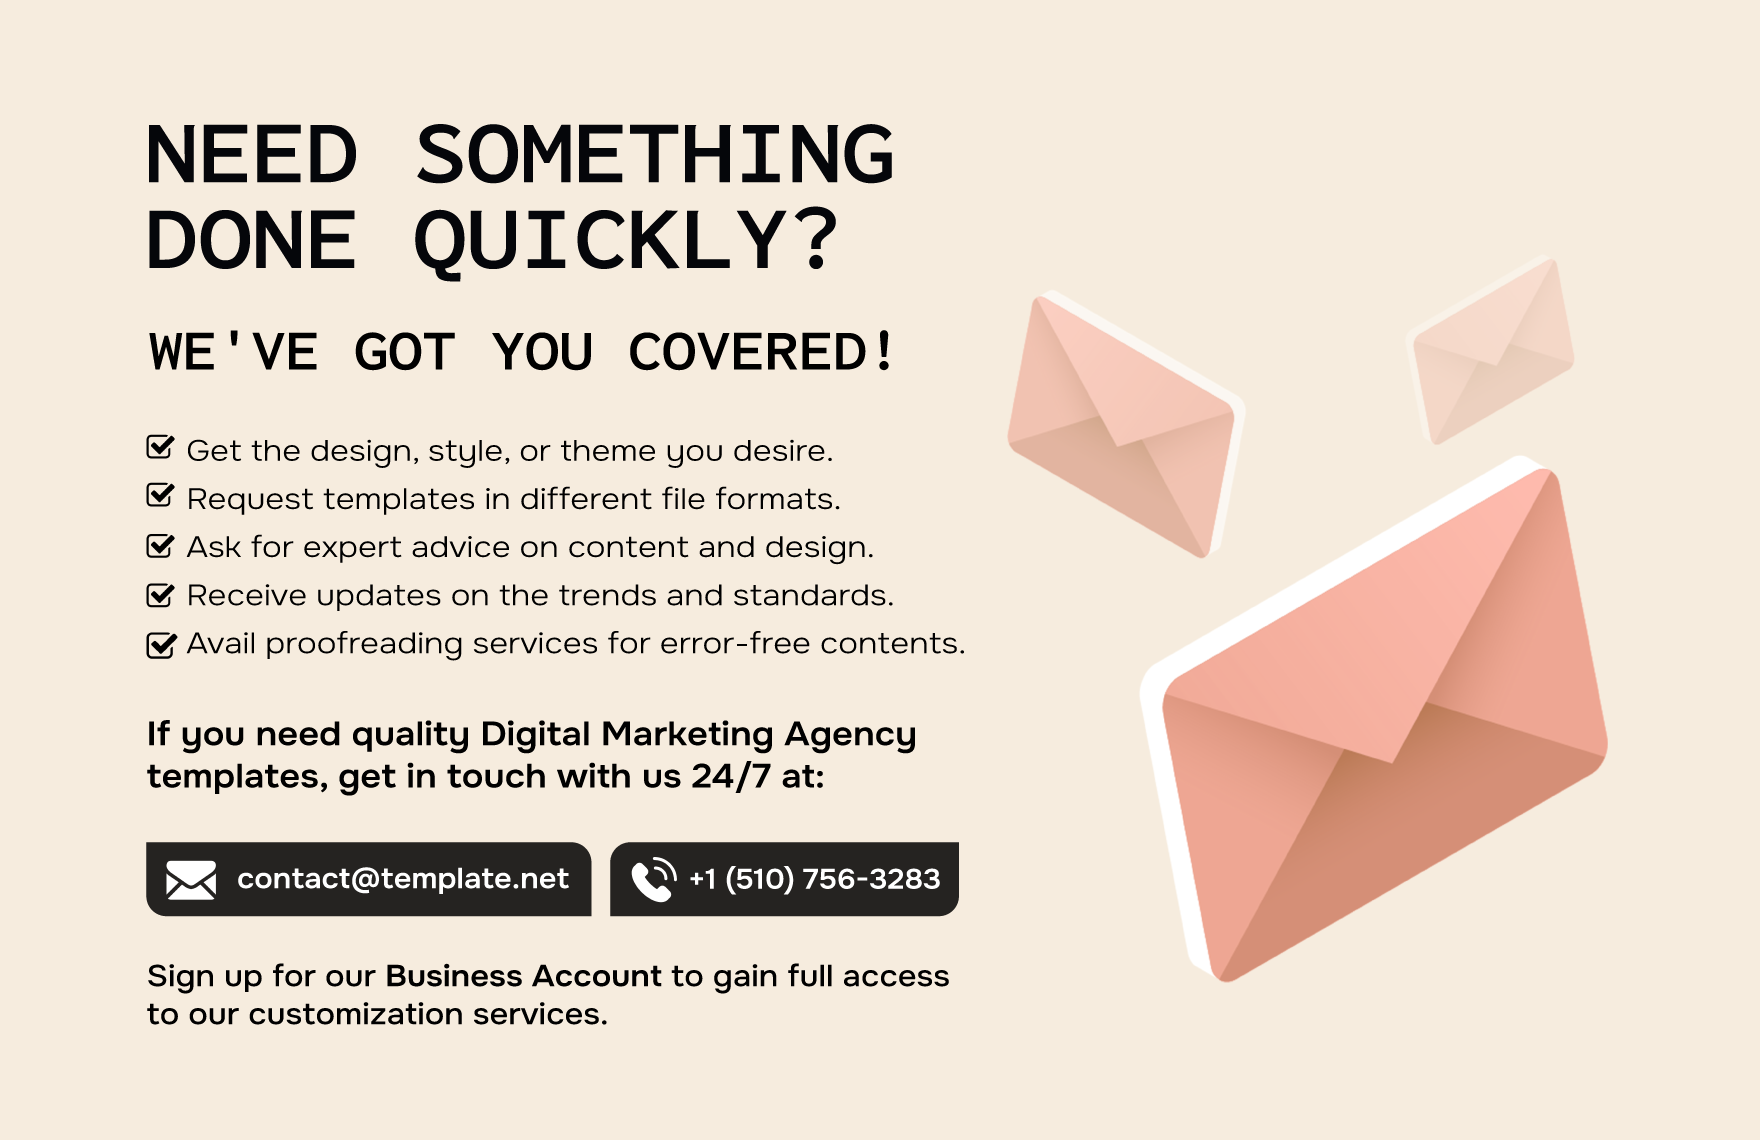 Digital Marketing Agency Colorful Letterhead Template